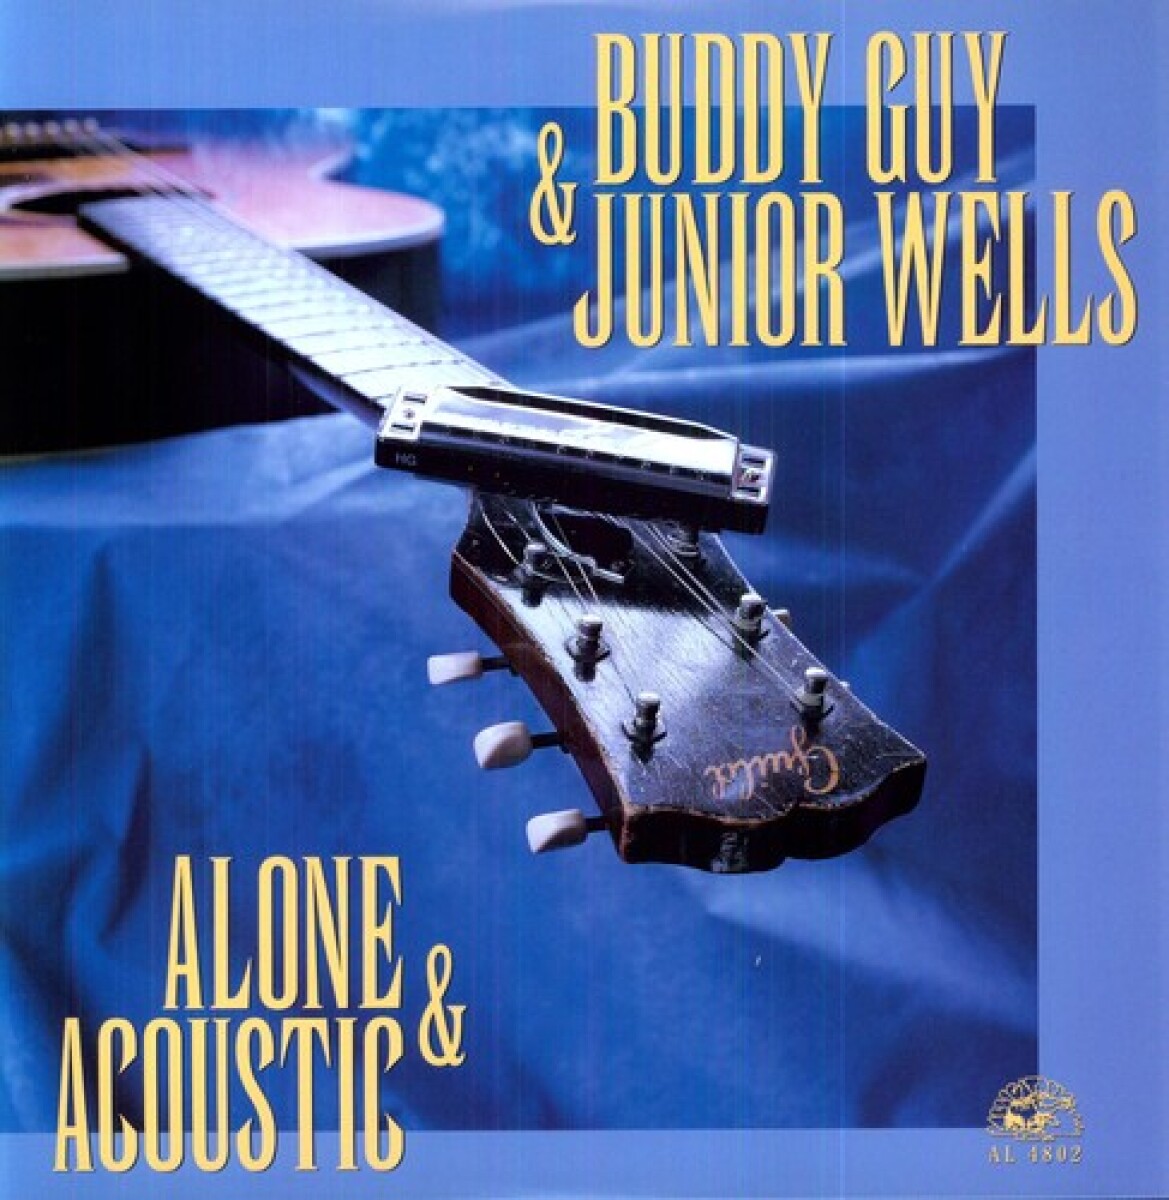 Guy Buddy / Wells Junior - Alone & Acoustic 